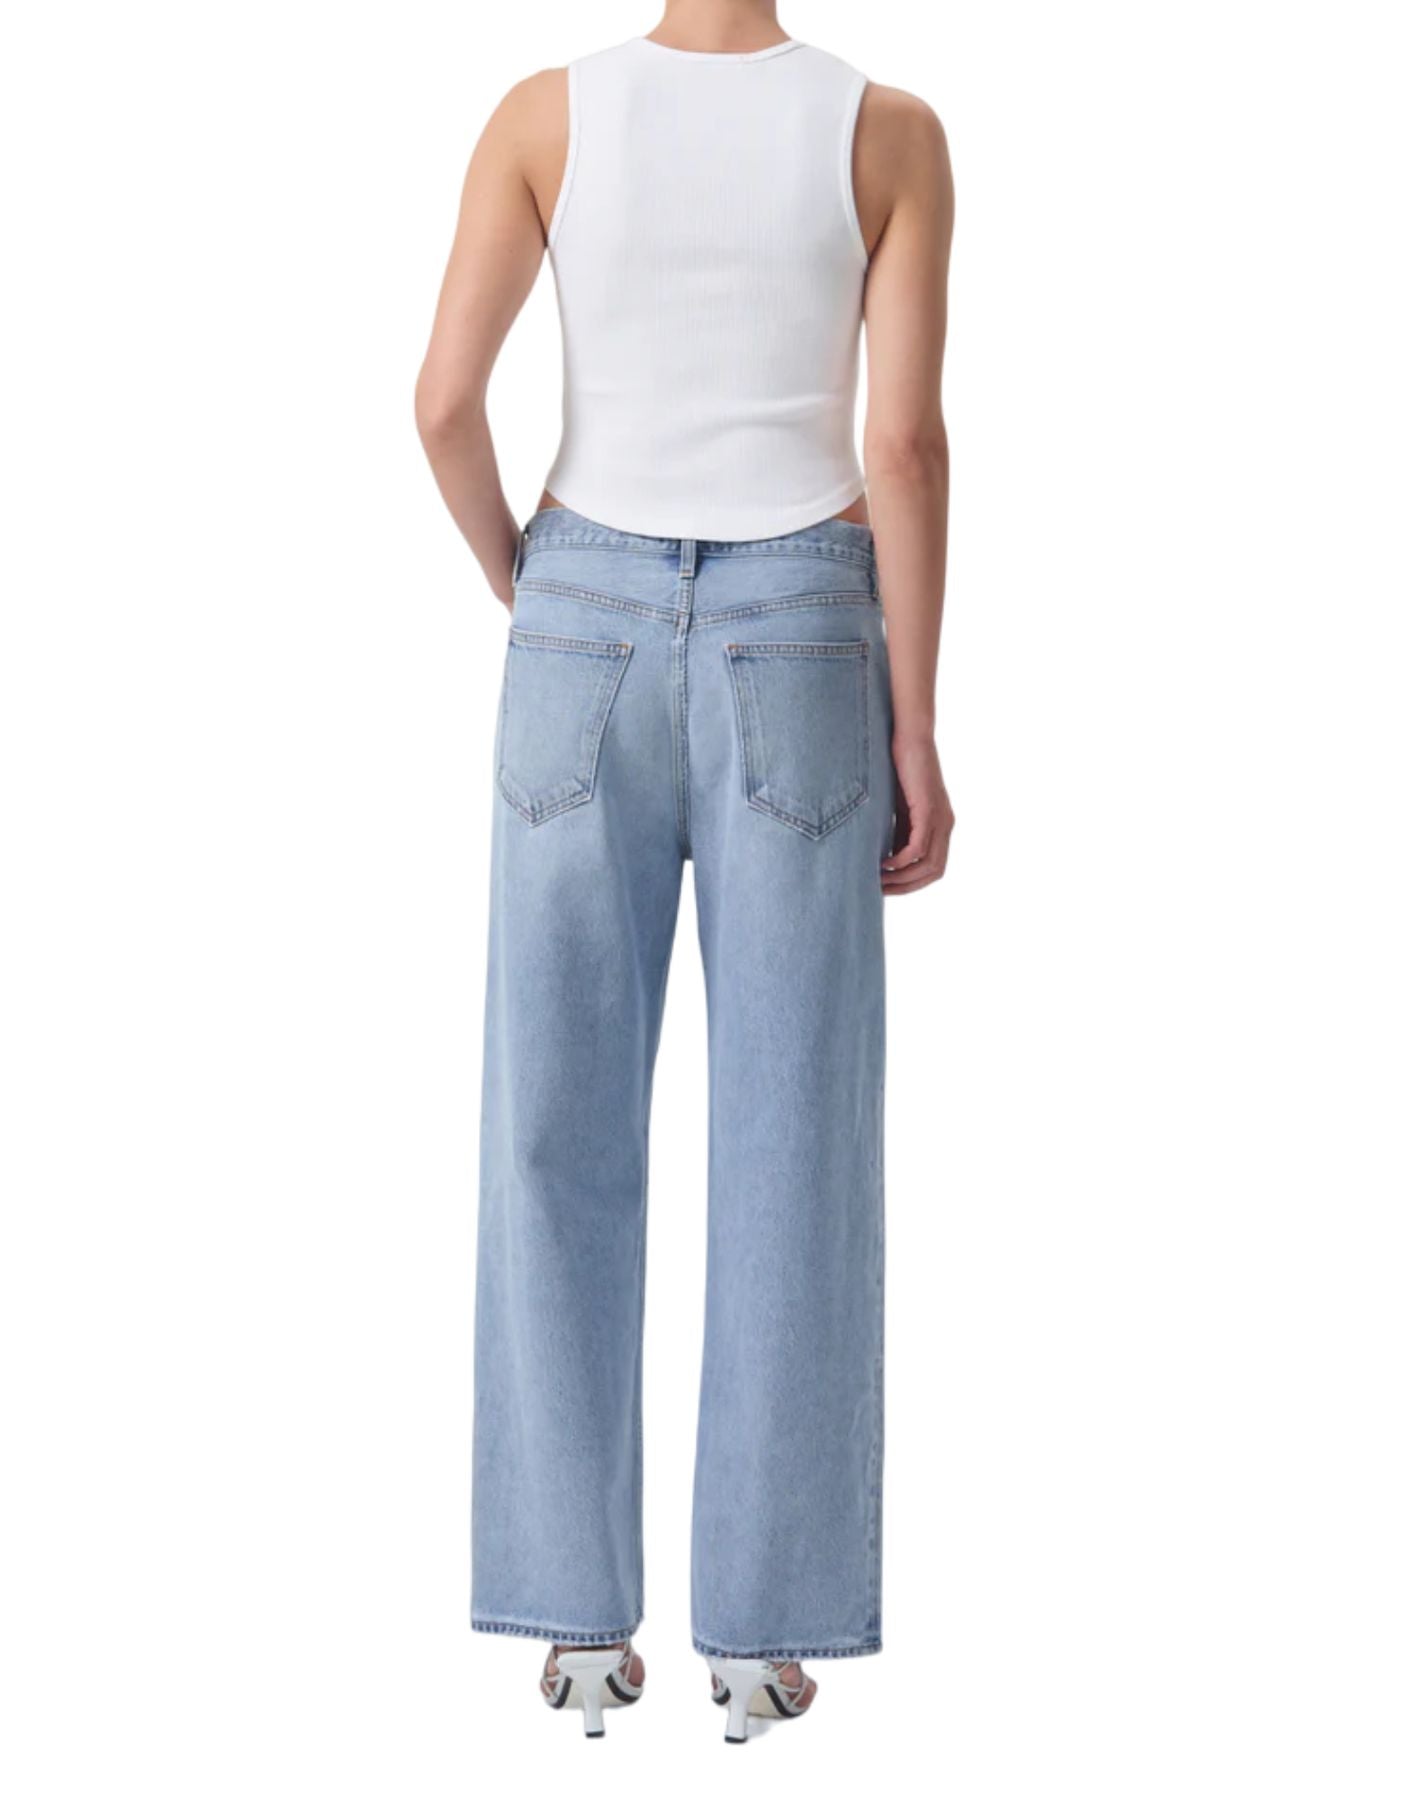 Jeans für Frau A9079-1535 Libertine Agolde